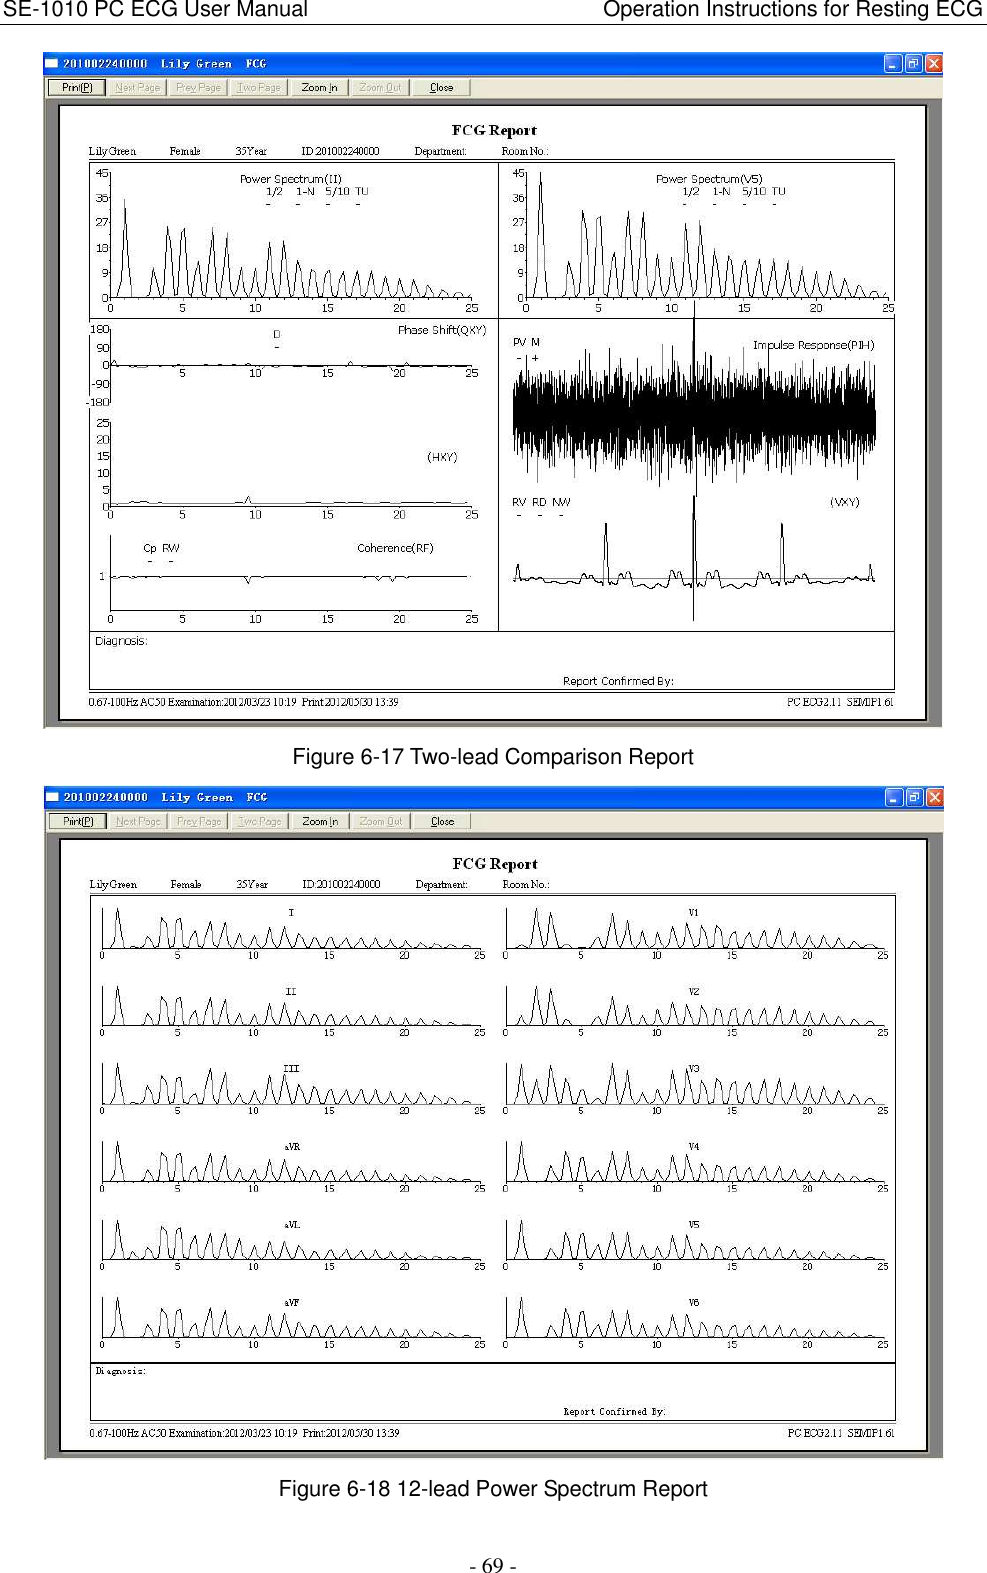 SE-1010 PC ECG User Manual                                                      Operation Instructions for Resting ECG - 69 -  Figure 6-17 Two-lead Comparison Report  Figure 6-18 12-lead Power Spectrum Report 